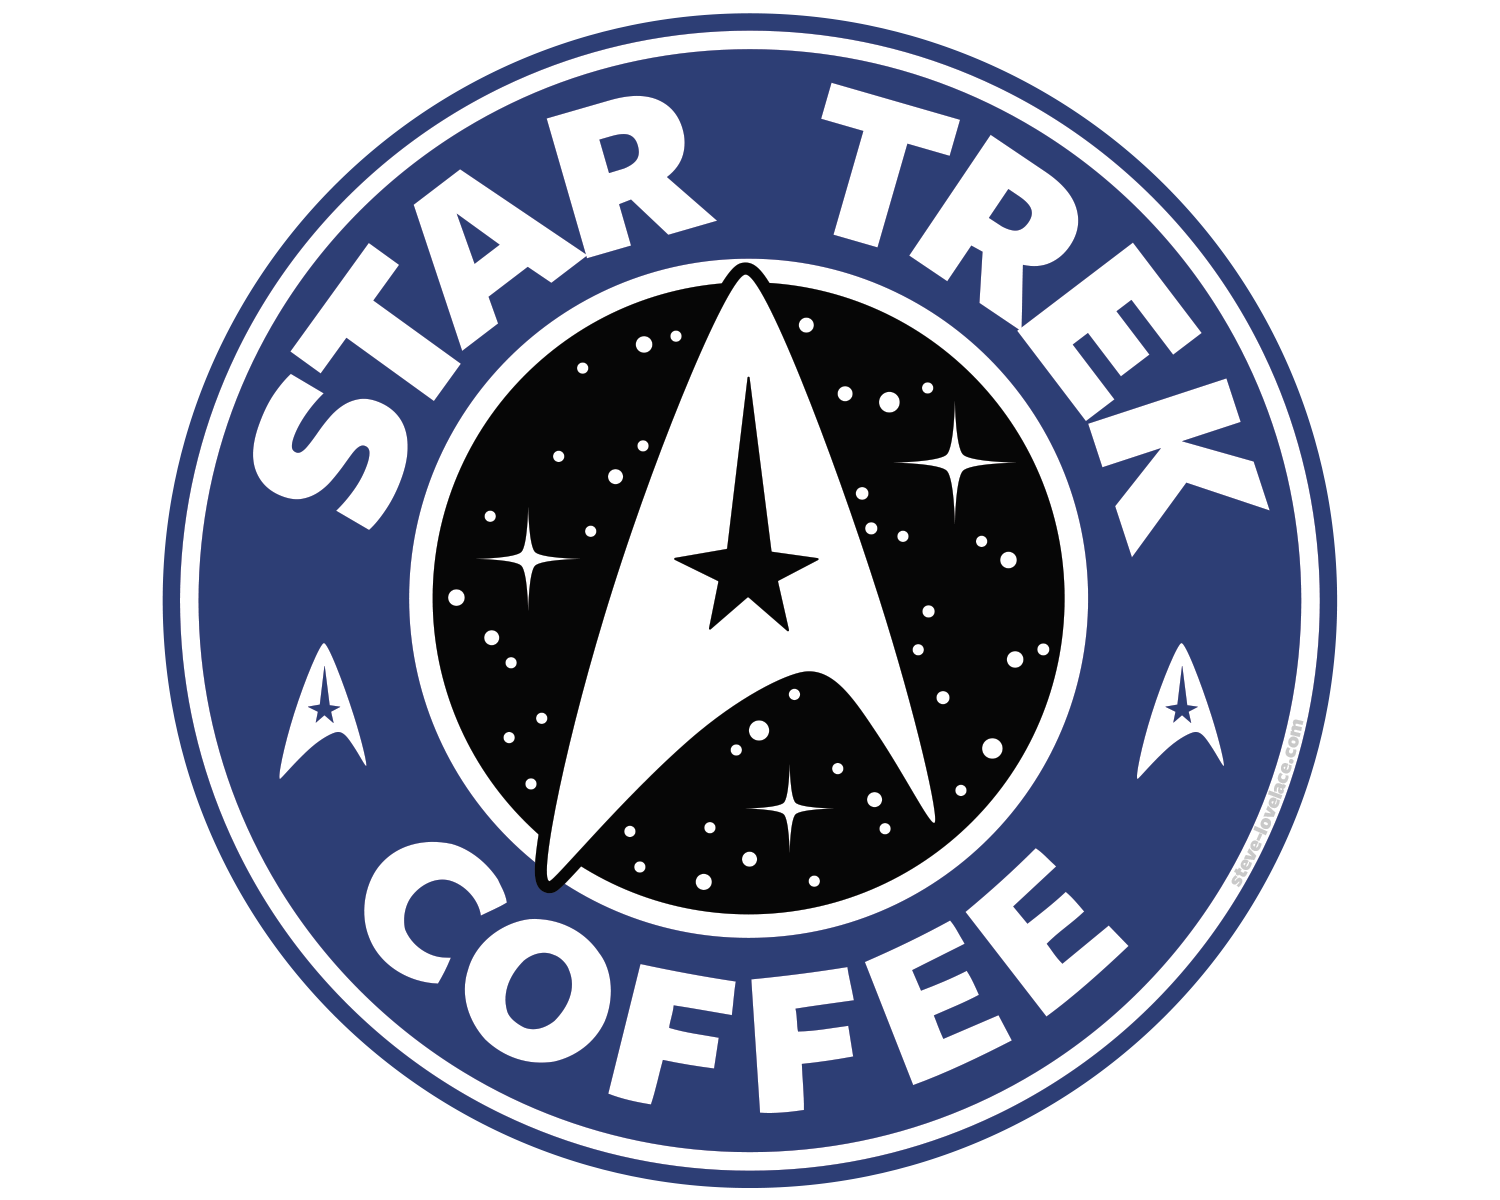 star trek coffee png logo picture #3579